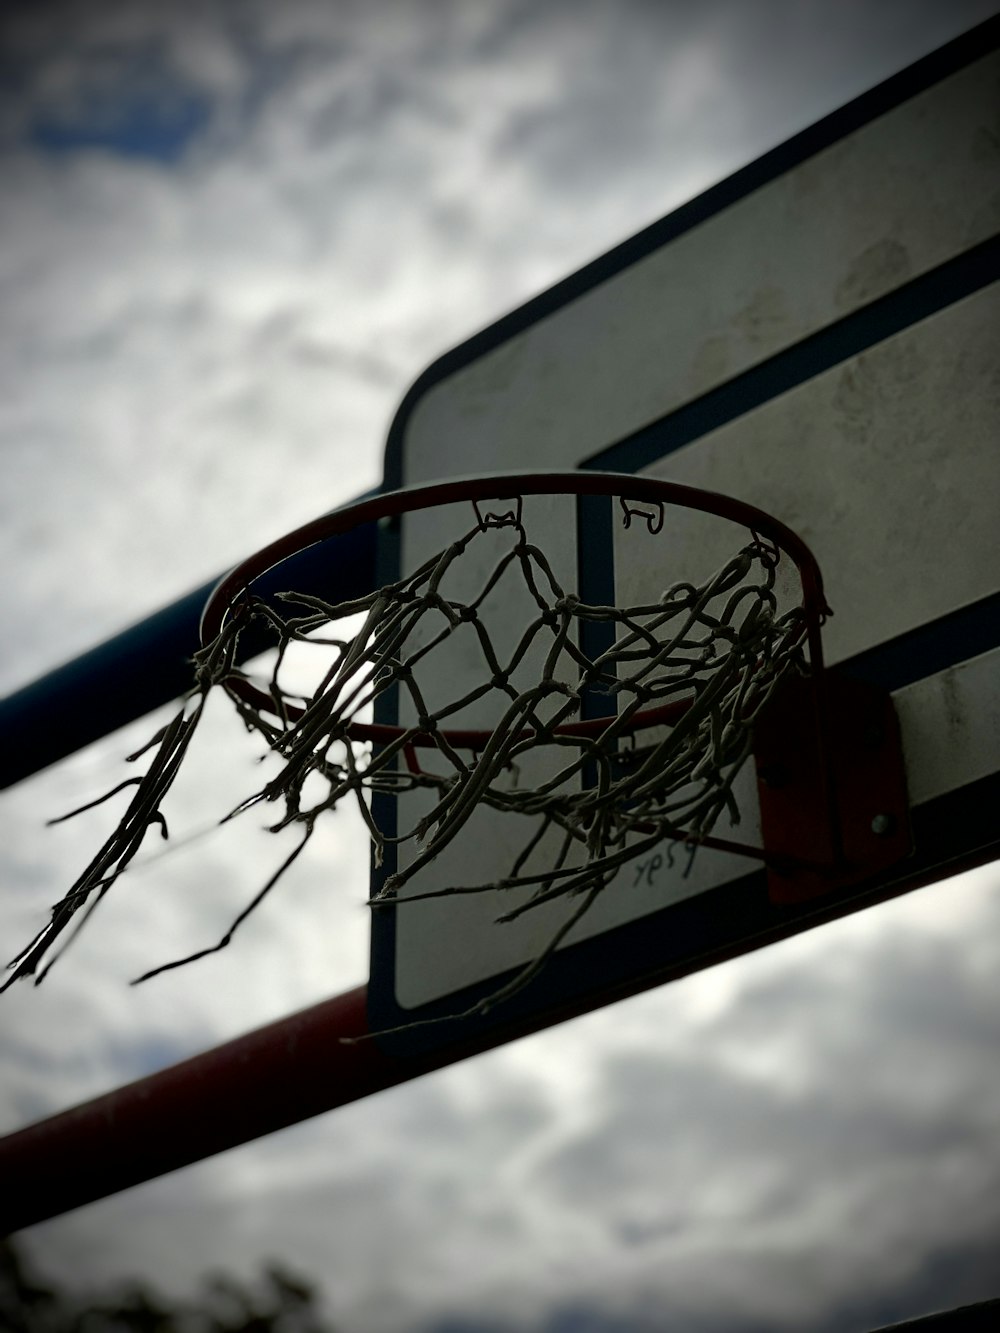 a basketball going through the rim of a basketball hoop